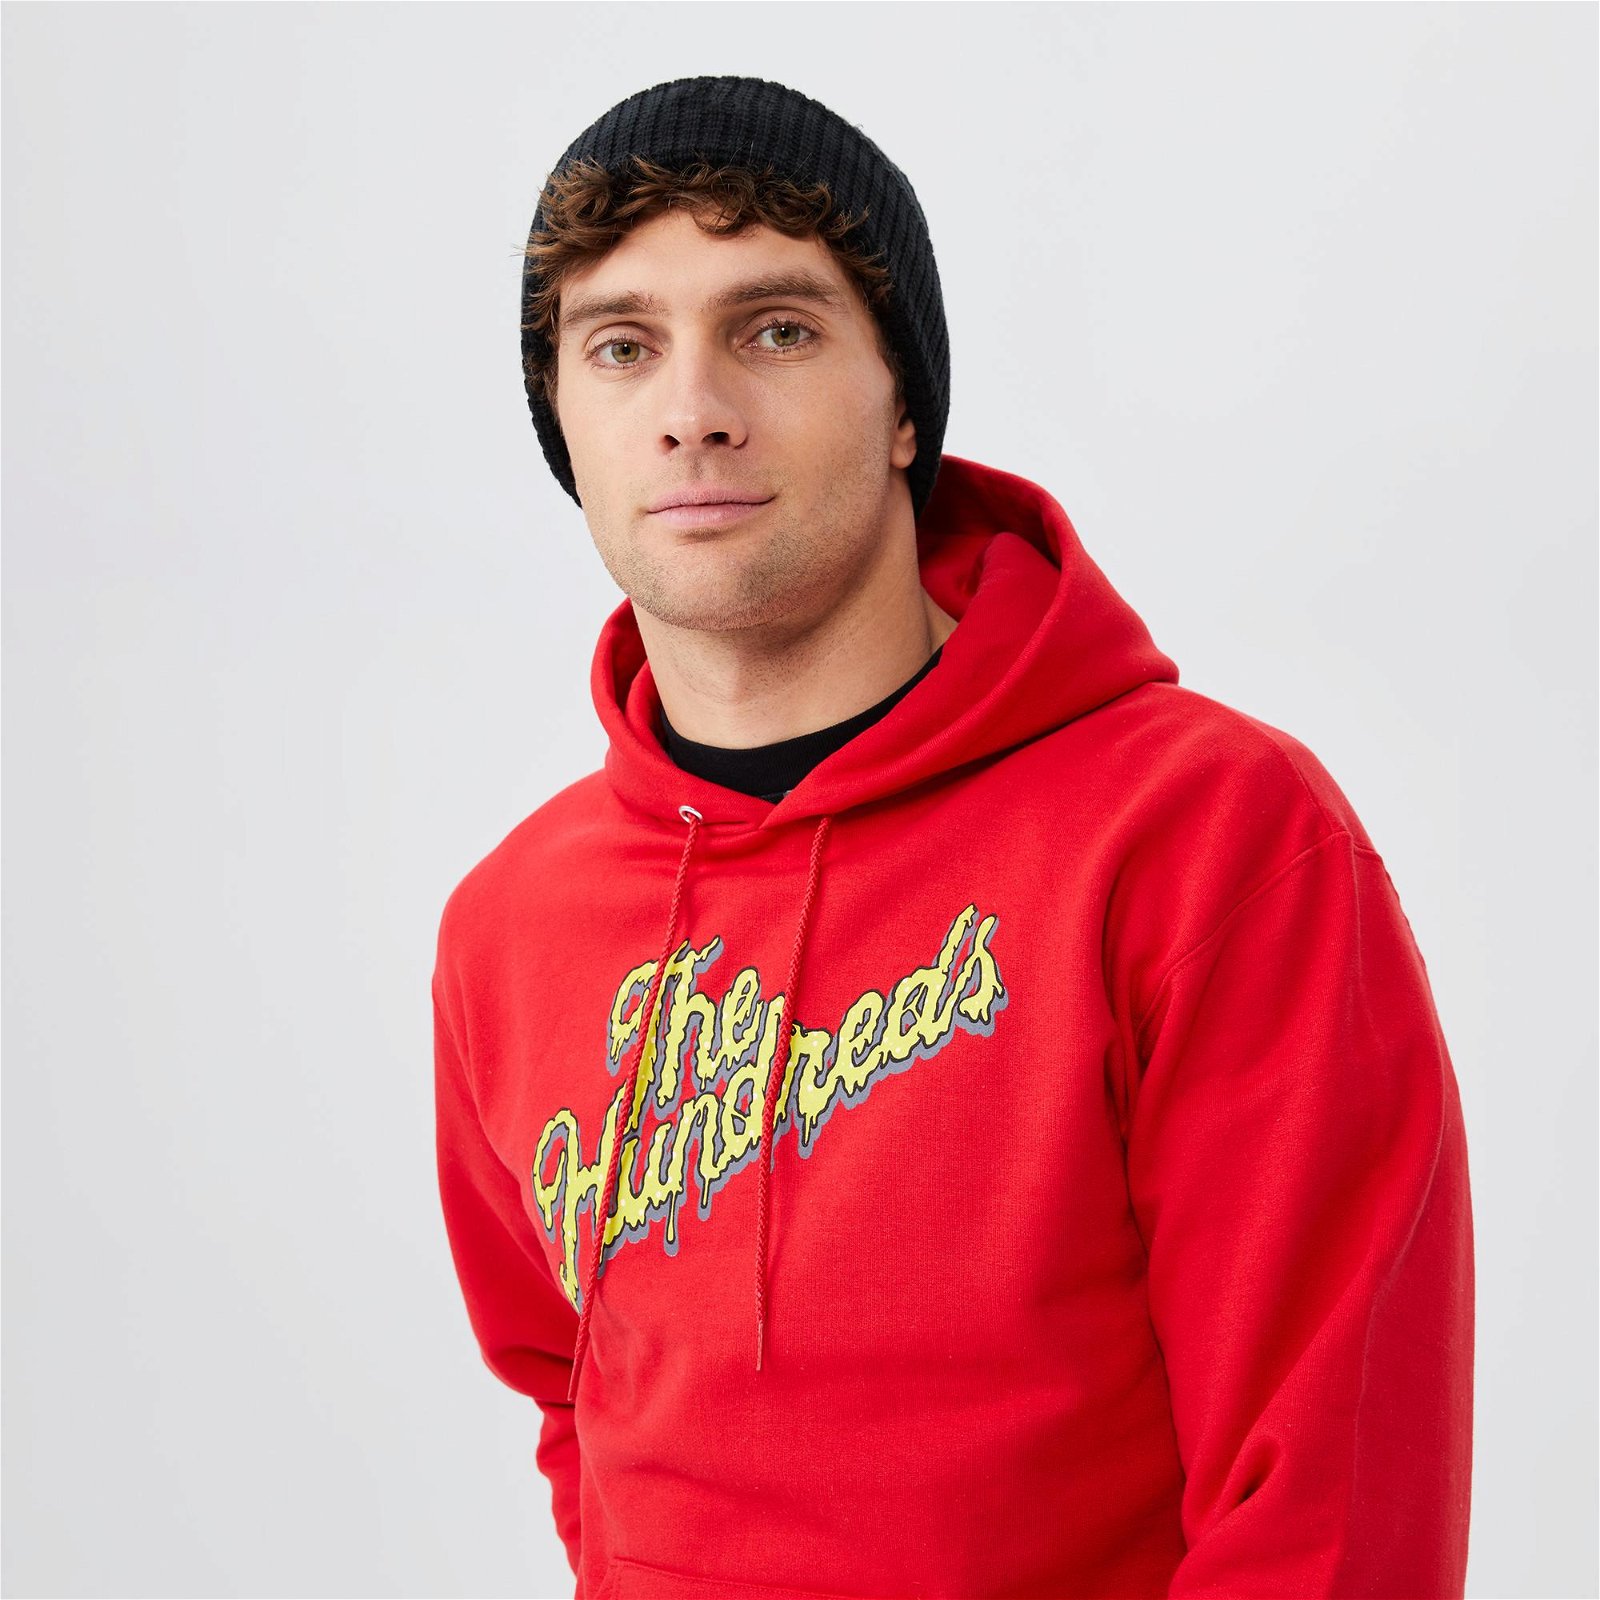 The Hundreds Slime Slant Pullover Erkek Kırmızı Hoodie Sweatshirt